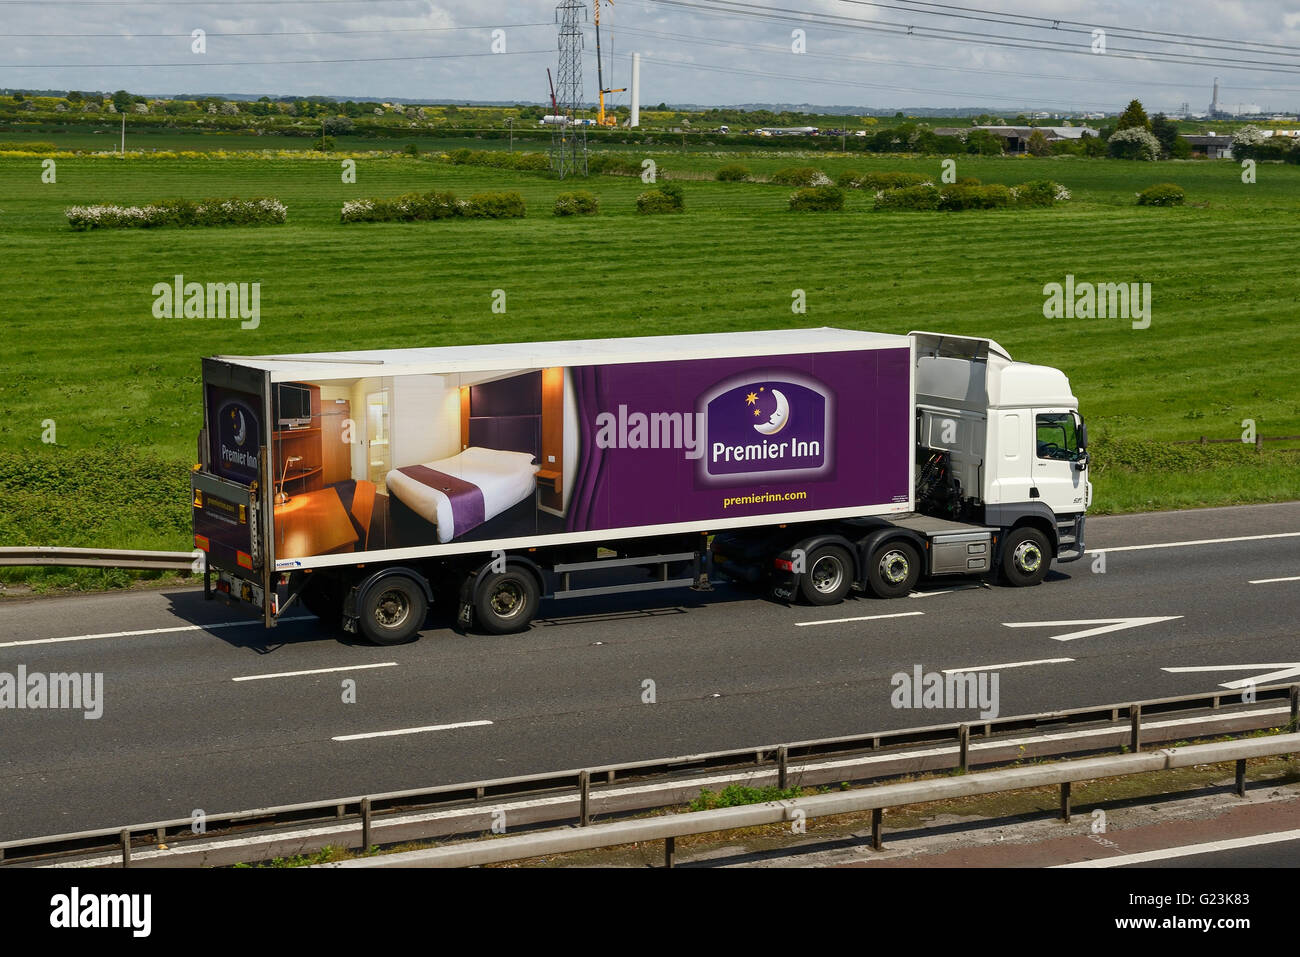 Premier Inn HGV travelling on the M56 motorway in Cheshire UK Stock Photo